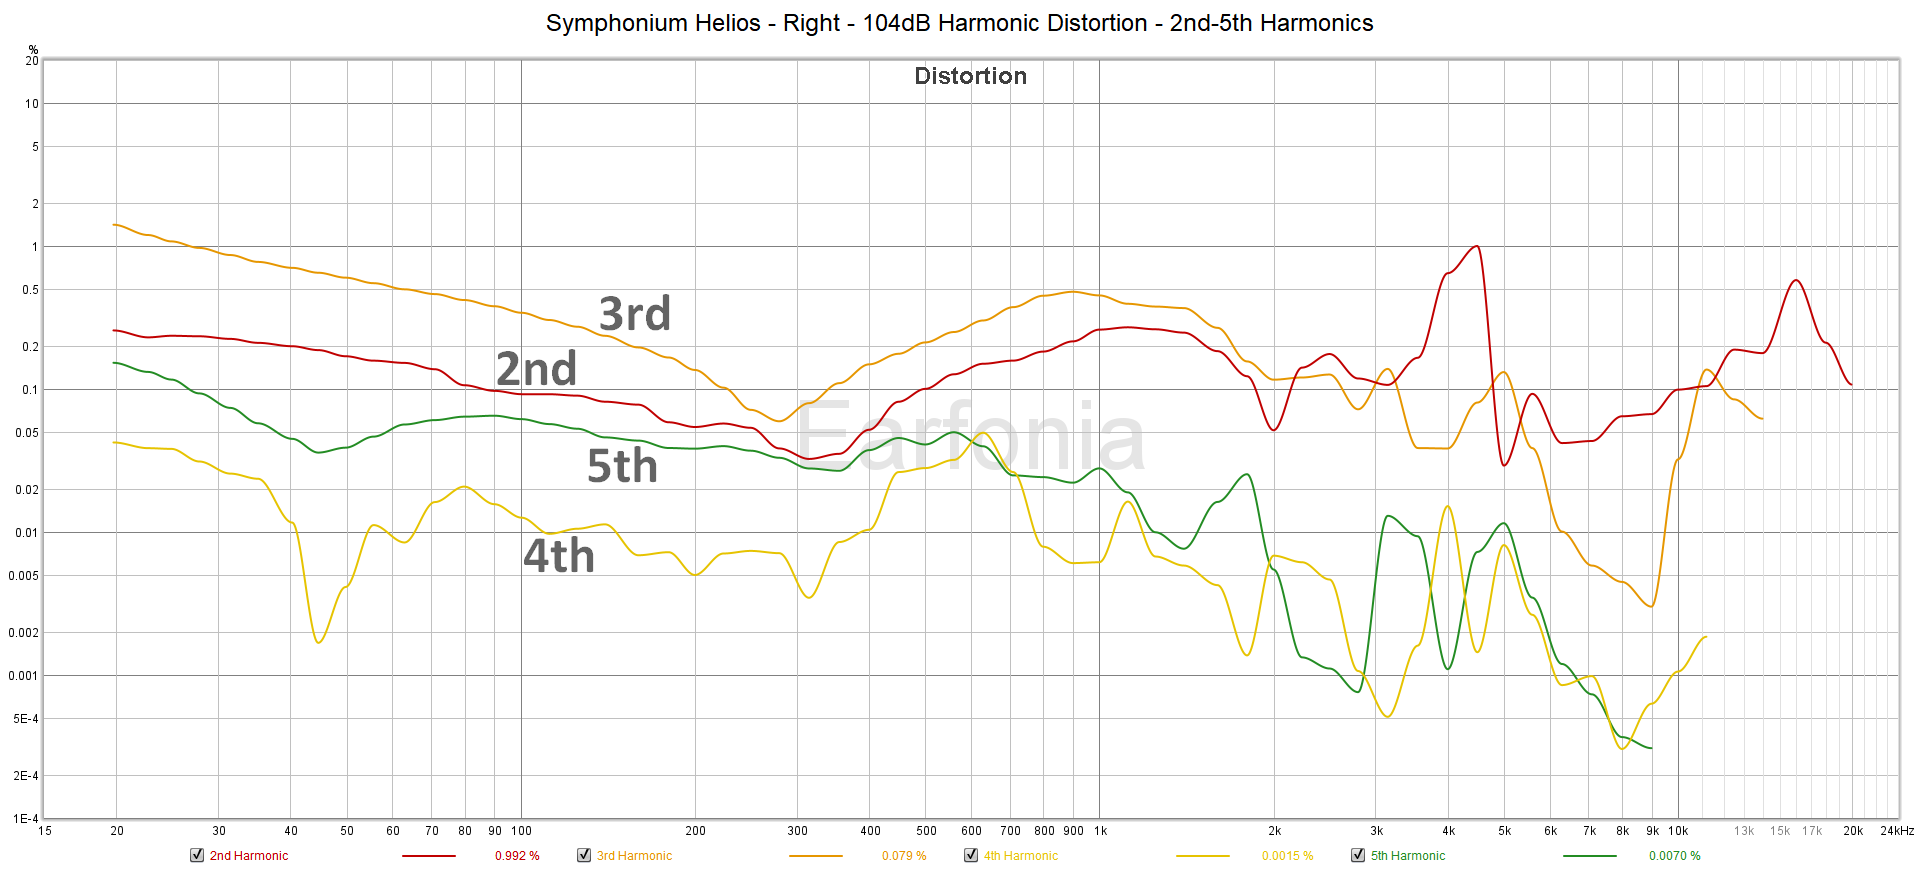 M15 Symphonium Helios - Right - 104dB Distortion - 2nd-5th Harmonics.png